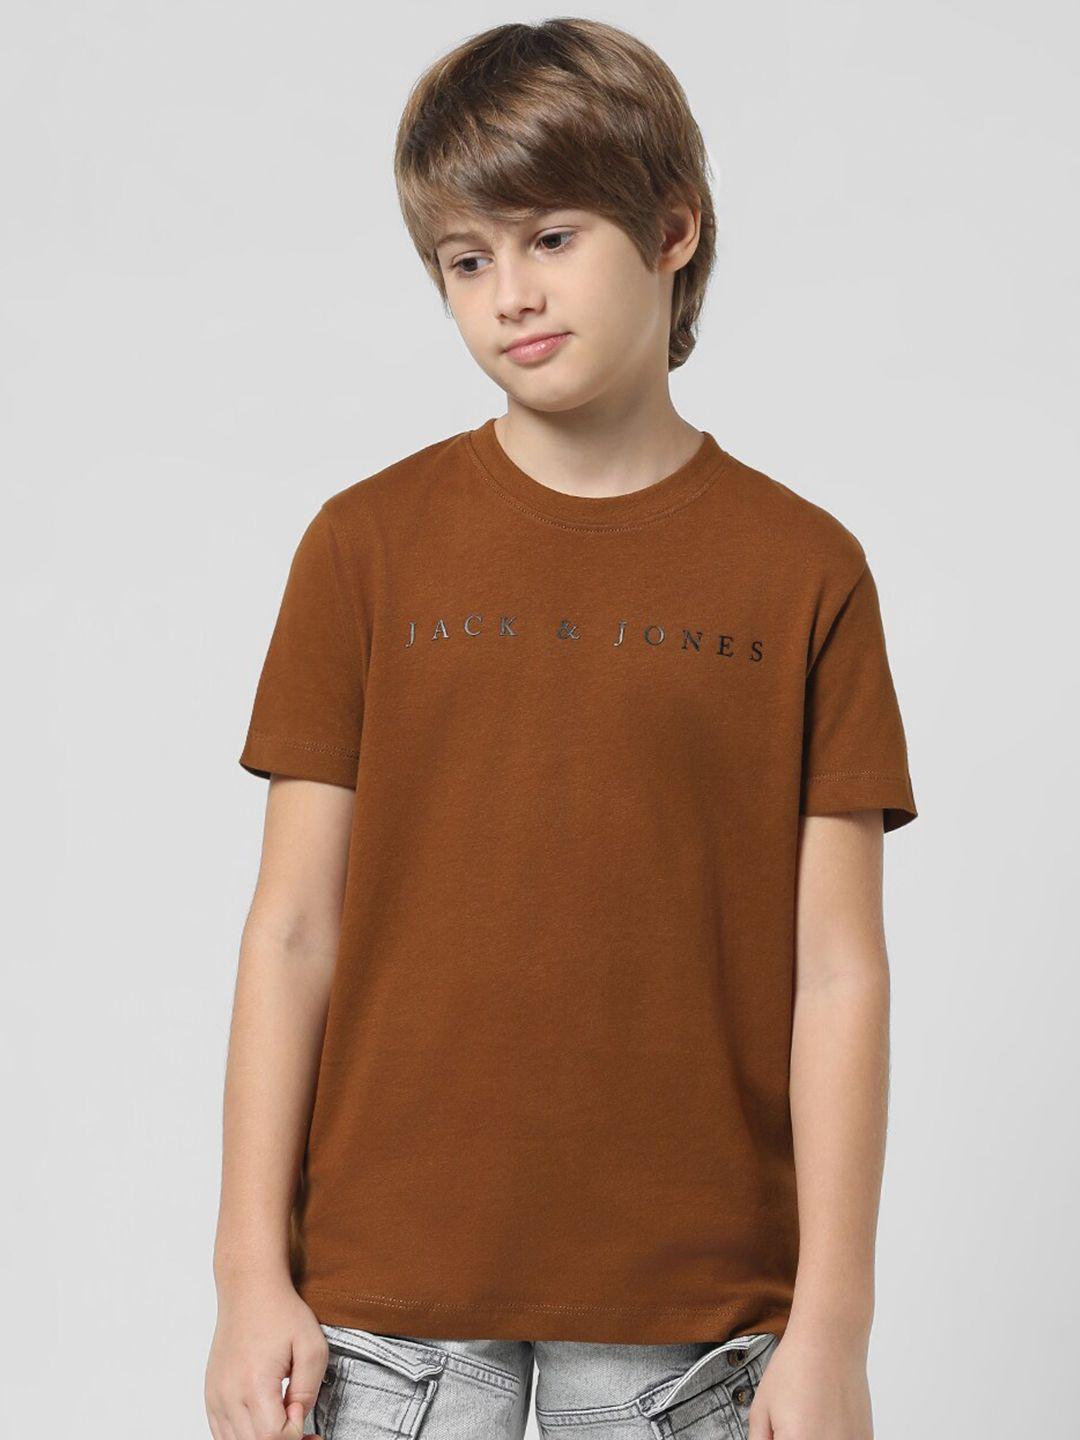 jack & jones junior boys typography printed round neck pure cotton t-shirt